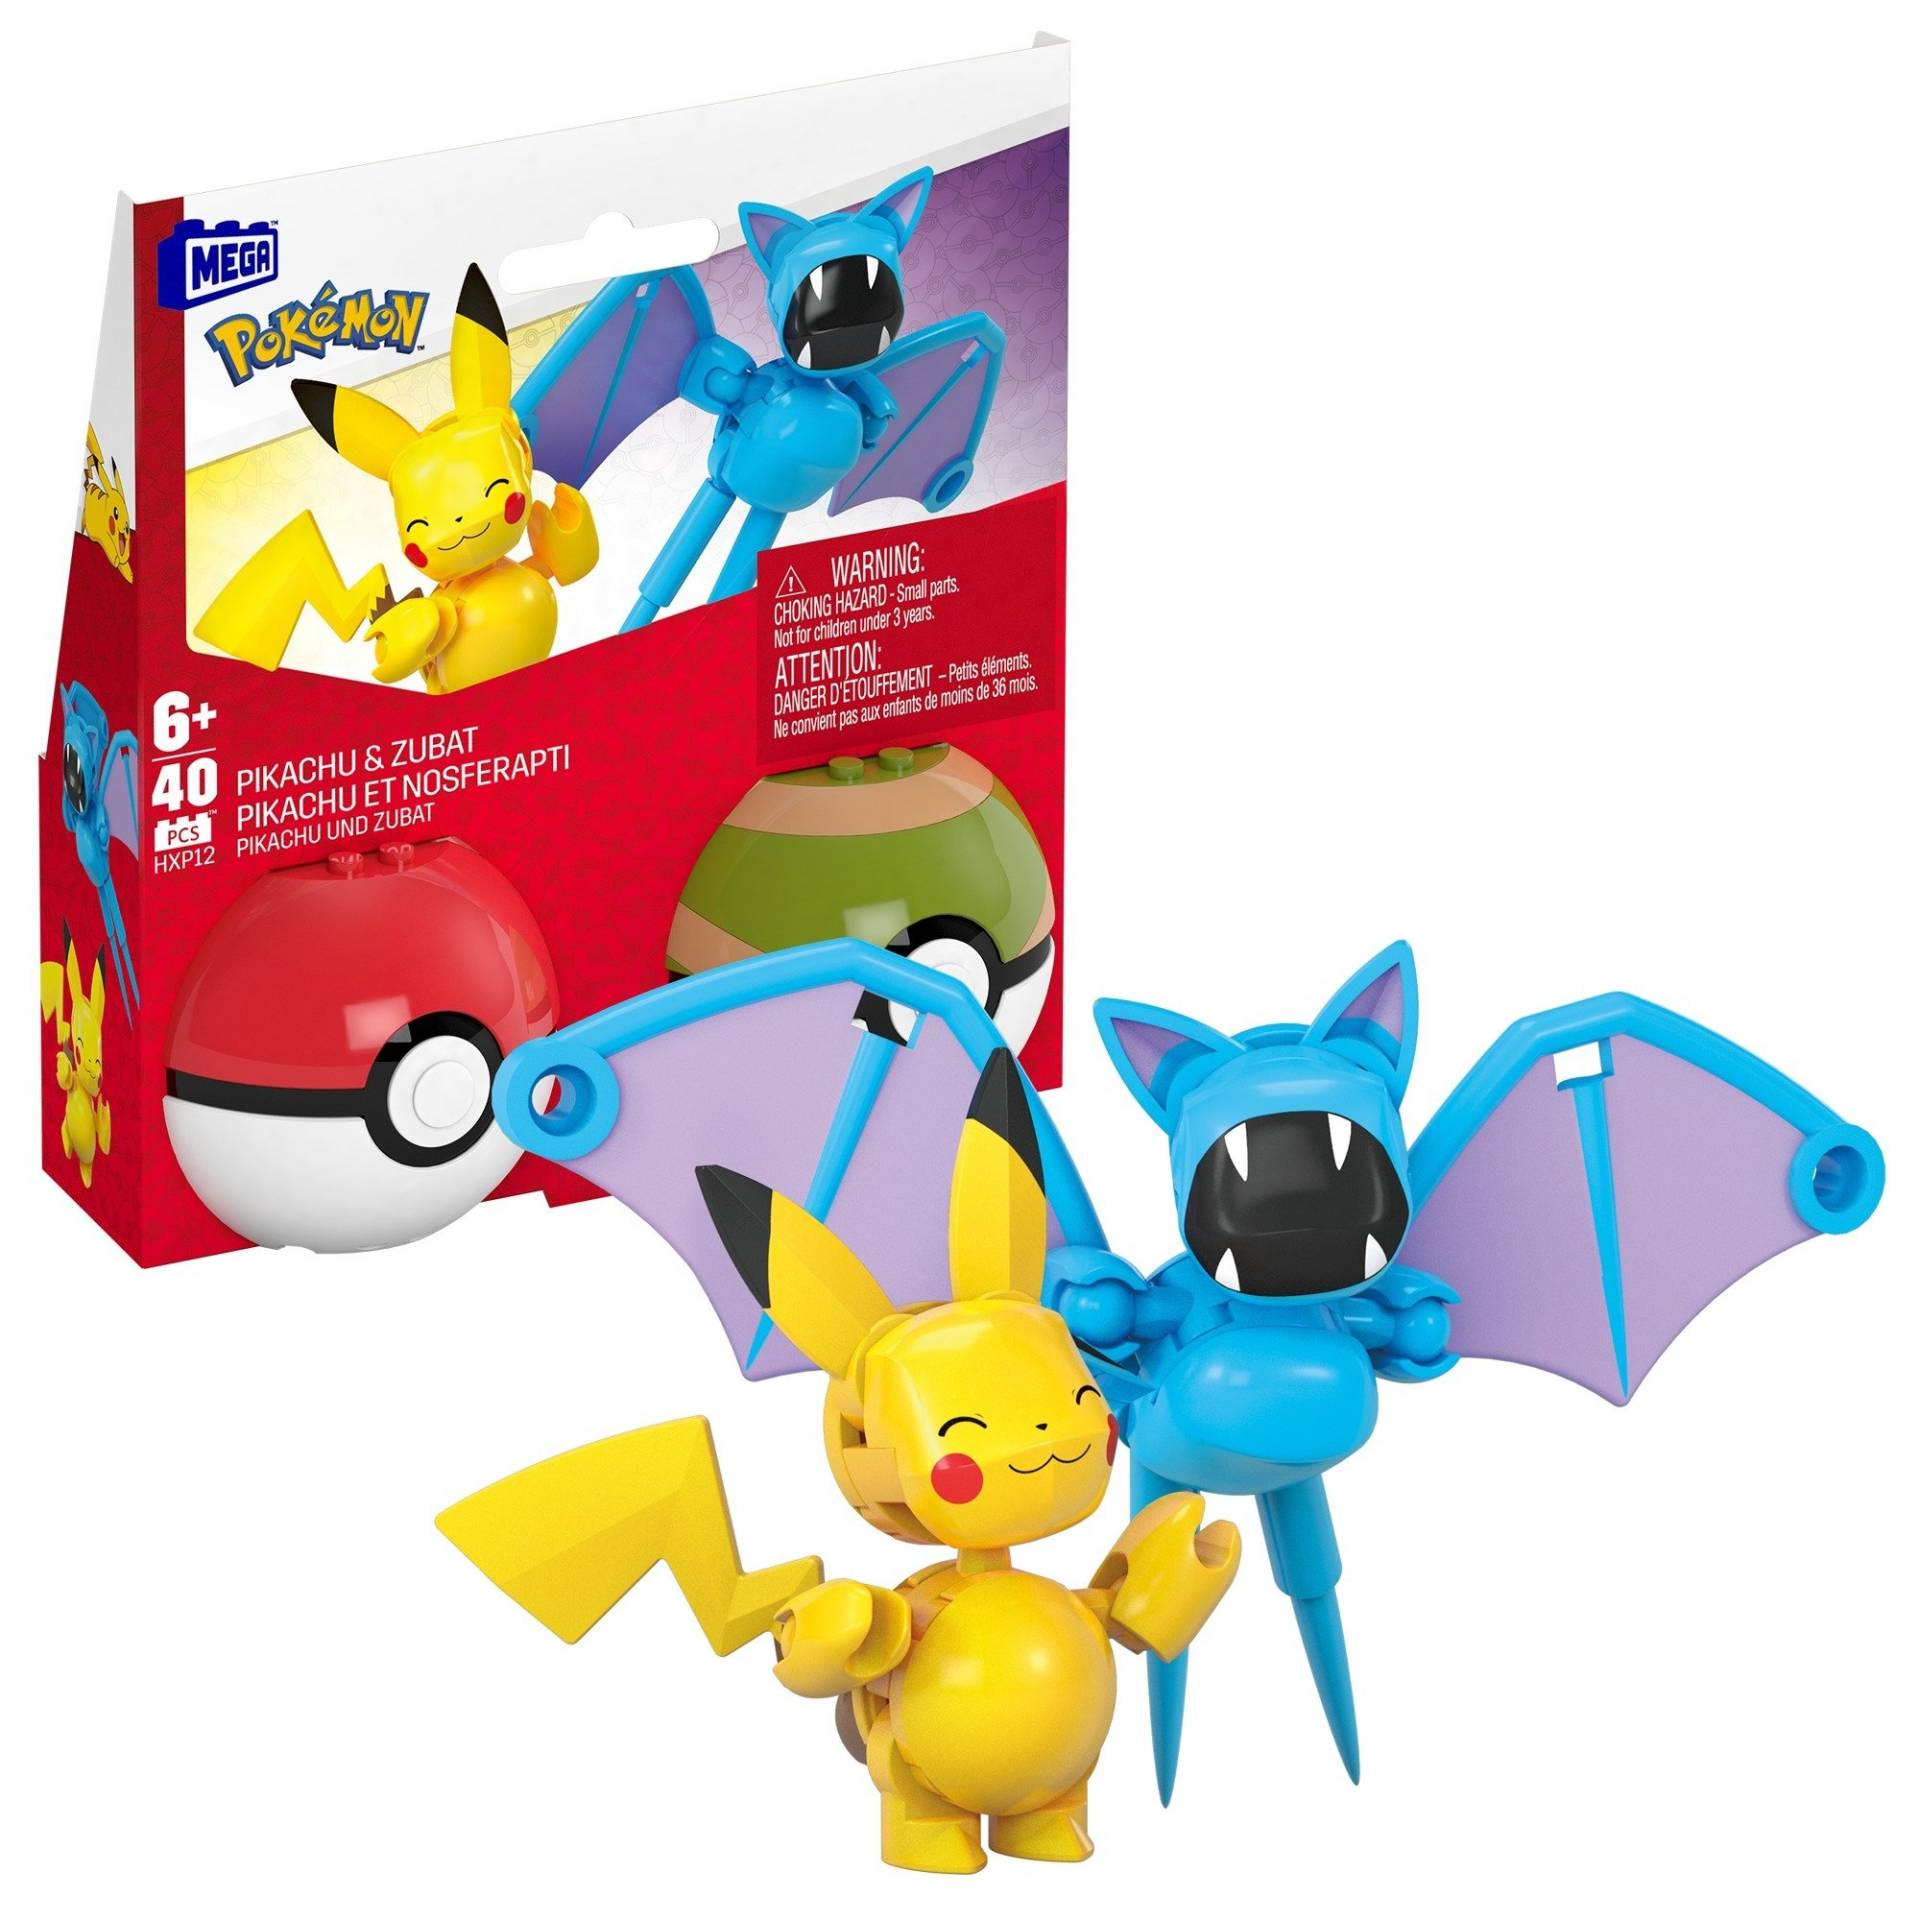 MEGA Pokémon Poké Ball - Pikachu und Zubat, Konstruktionsspielzeug von Mattel